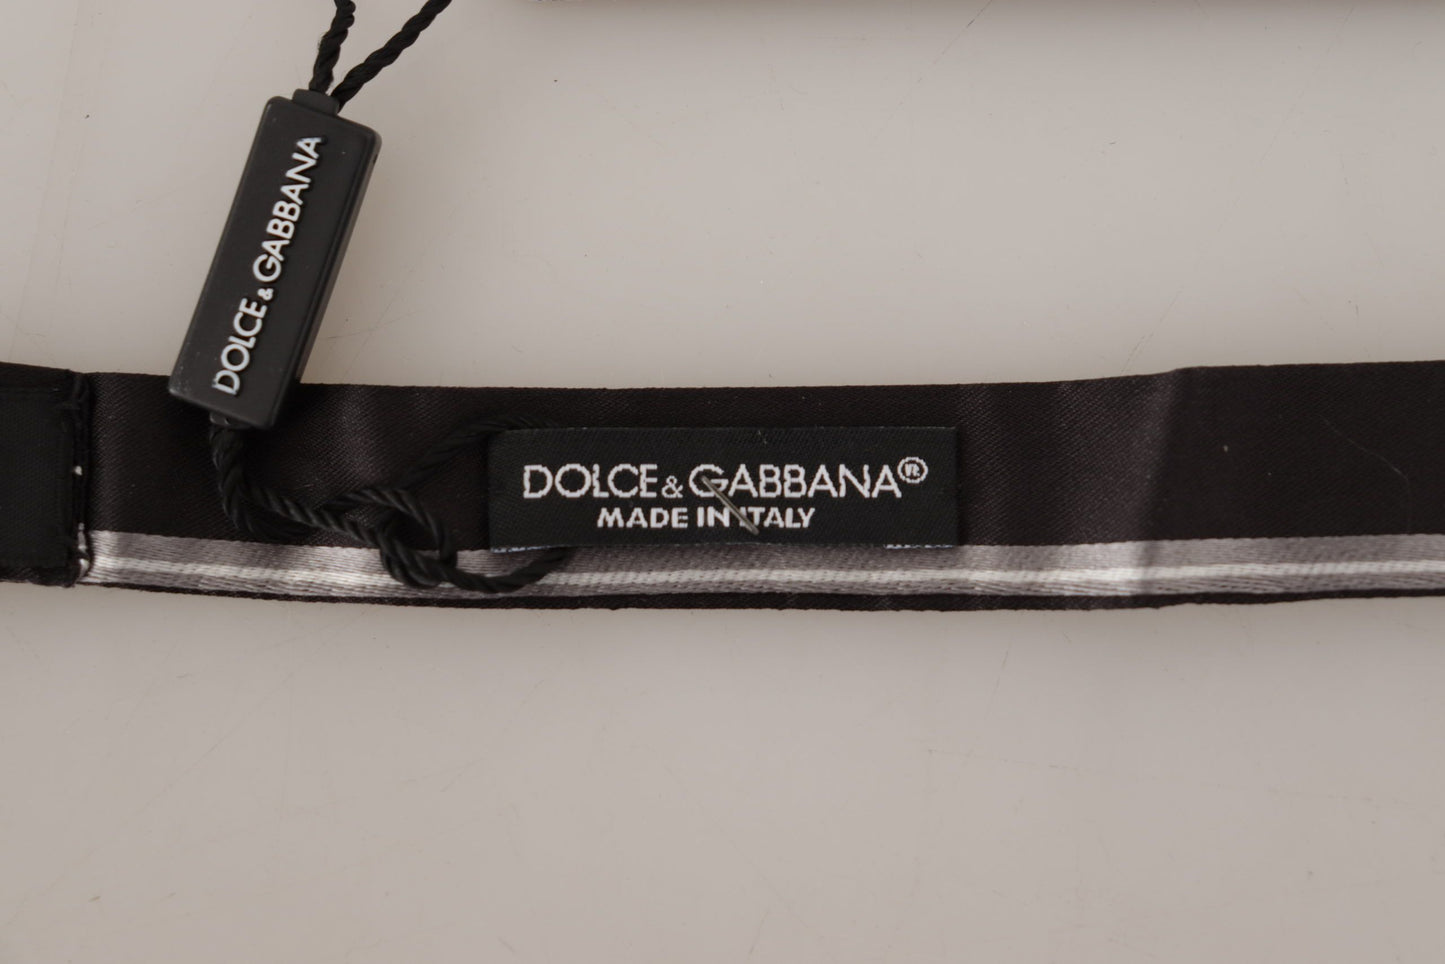 Dolce & Gabbana Elegant Silk Bow Tie in Black and Grey